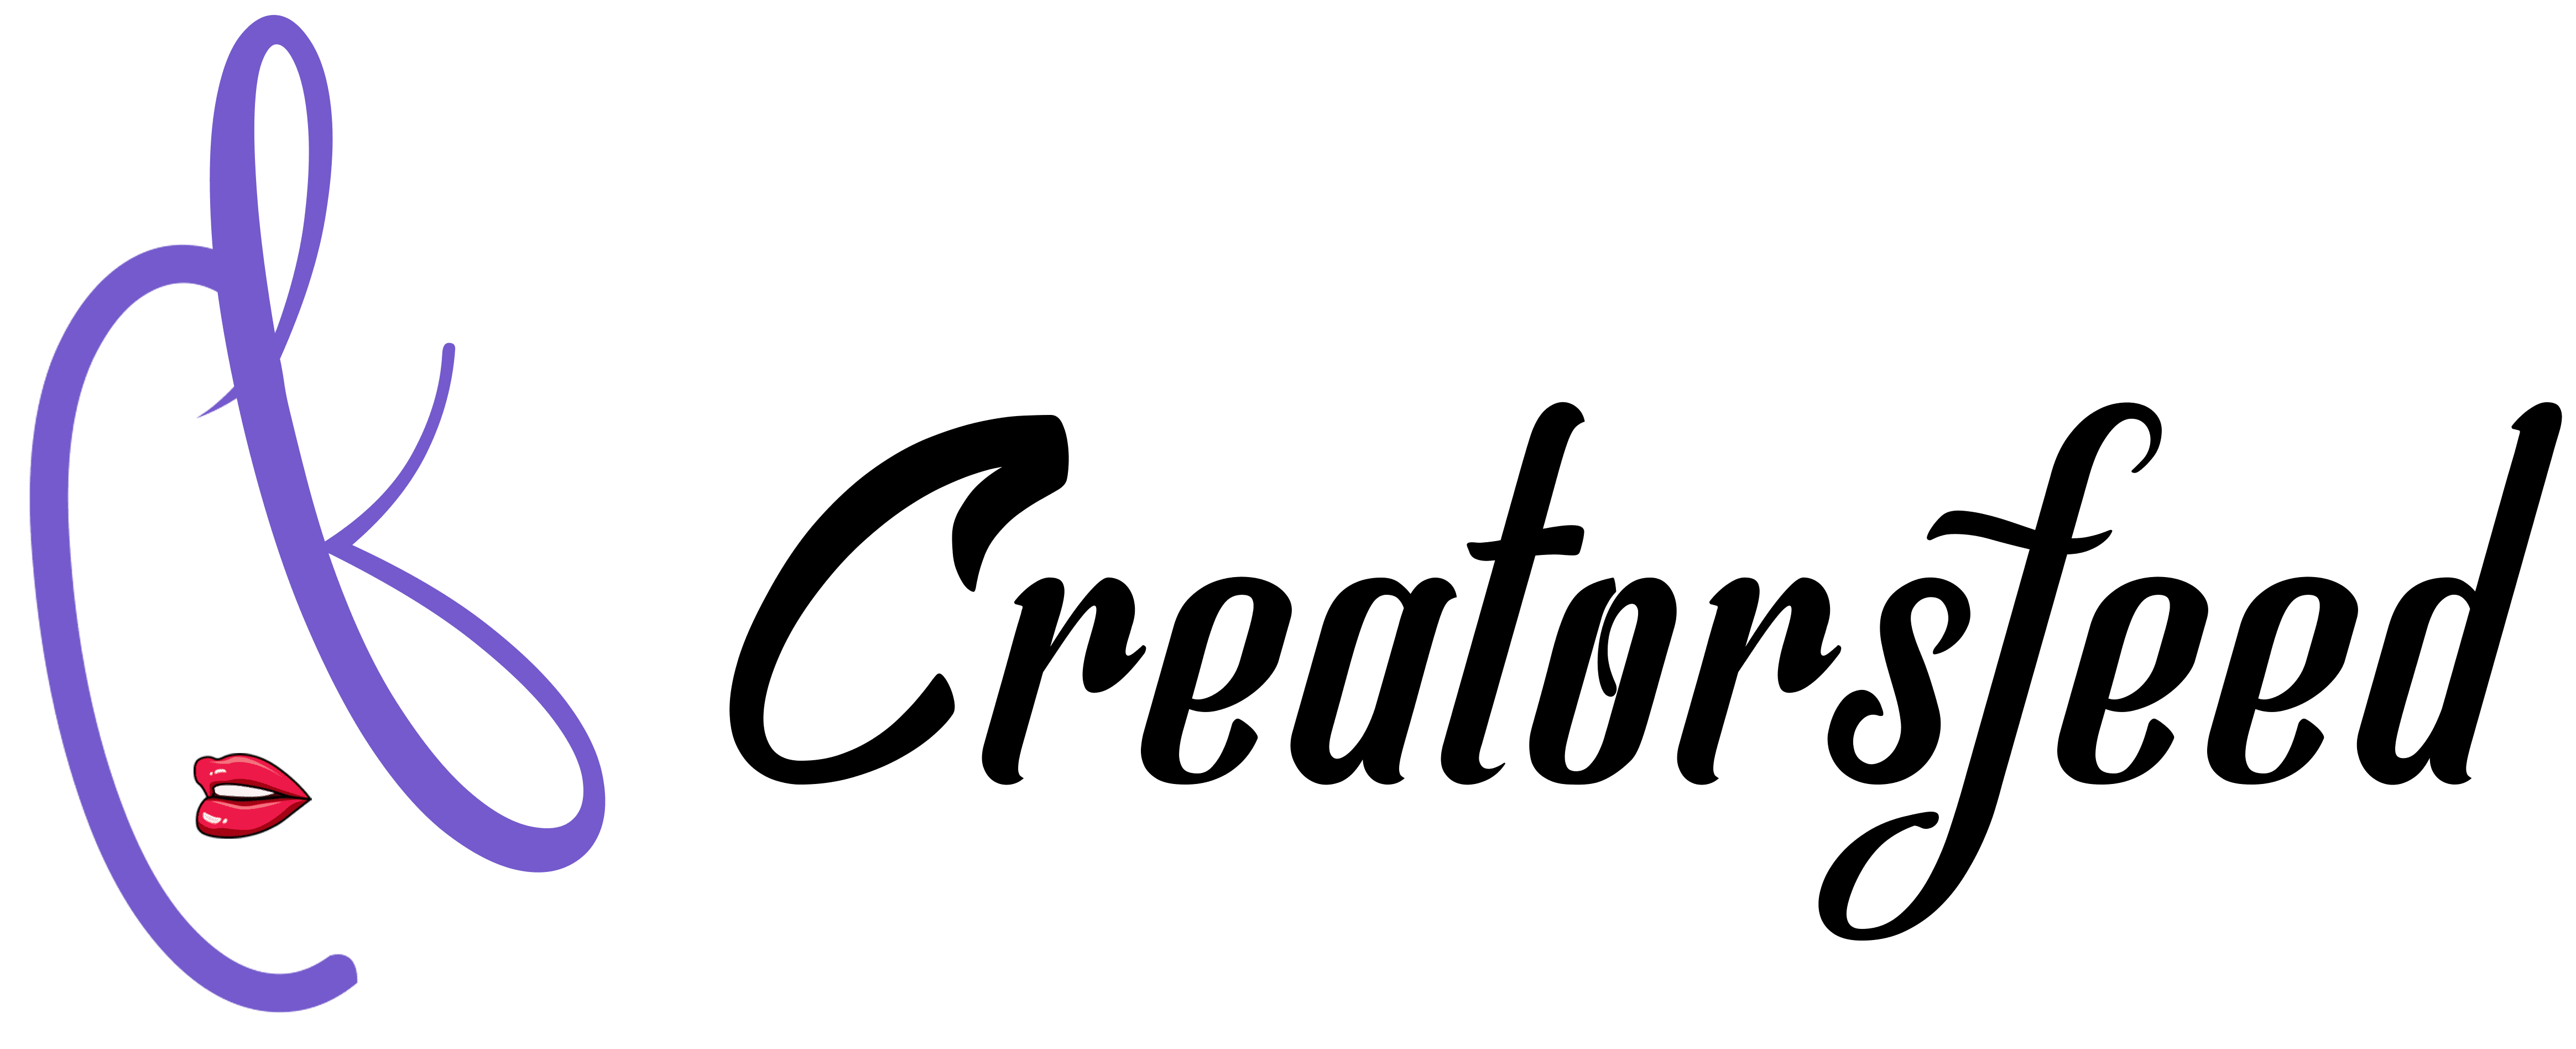 CreatorsFeed